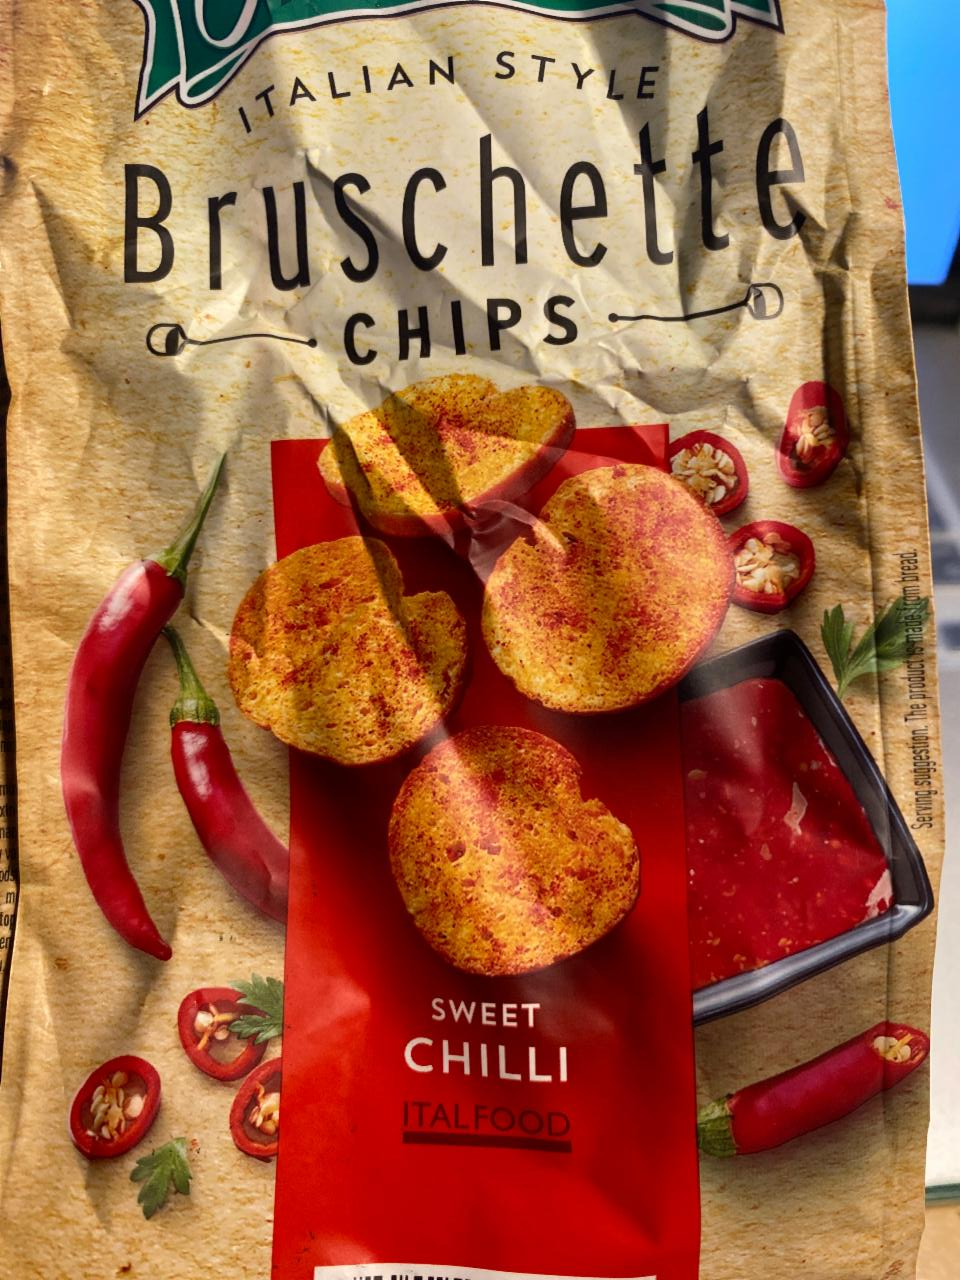 Fotografie - Bruschette chips Sweet chilli Maretti